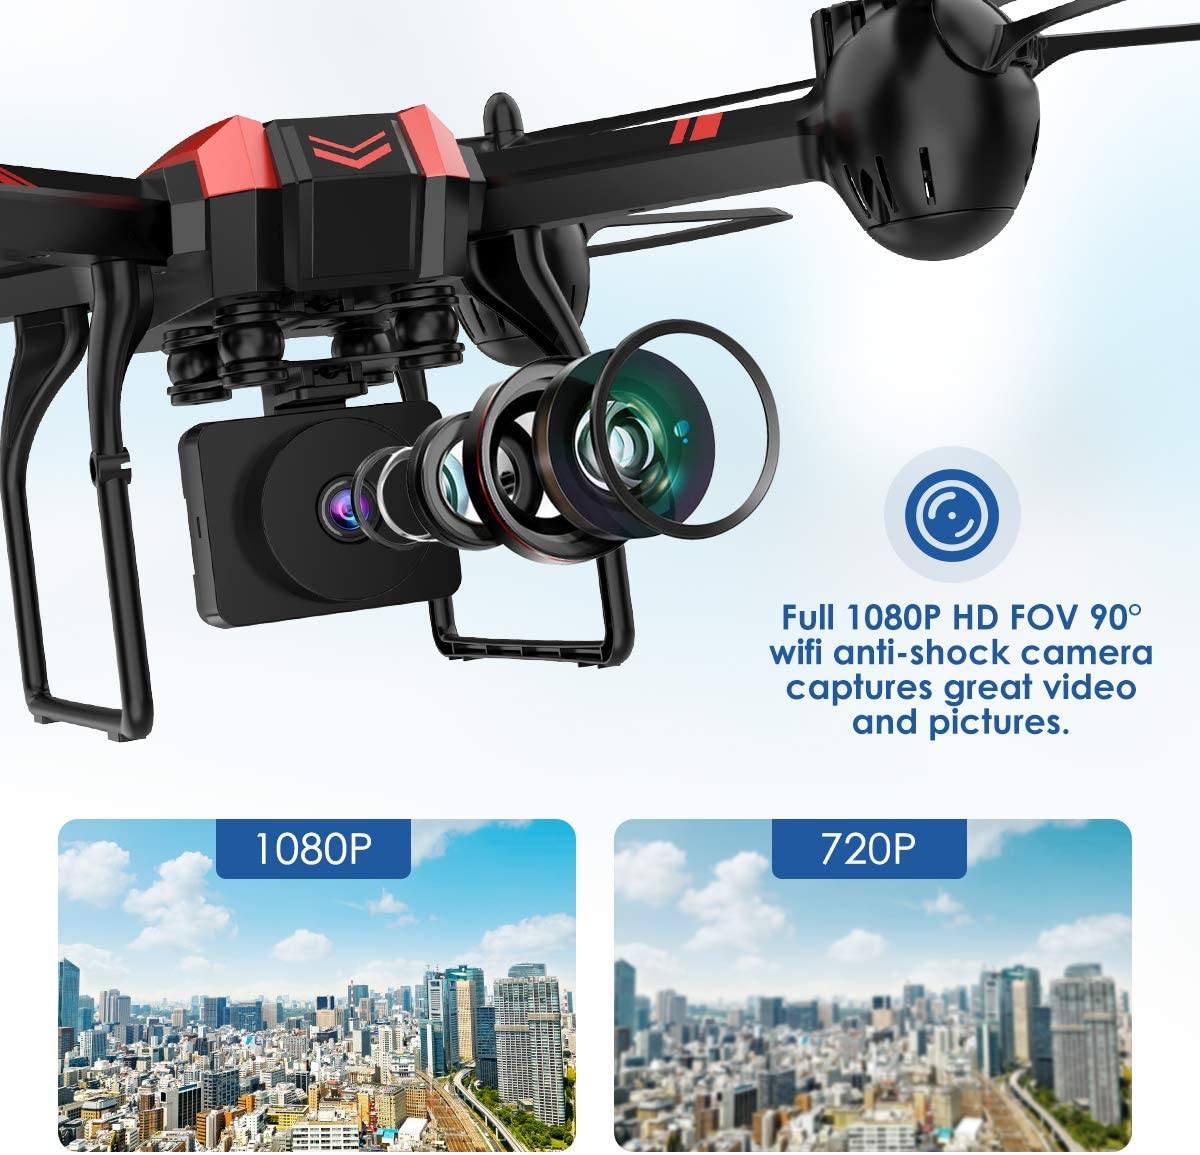 Sanrock X105W Drone with Camera